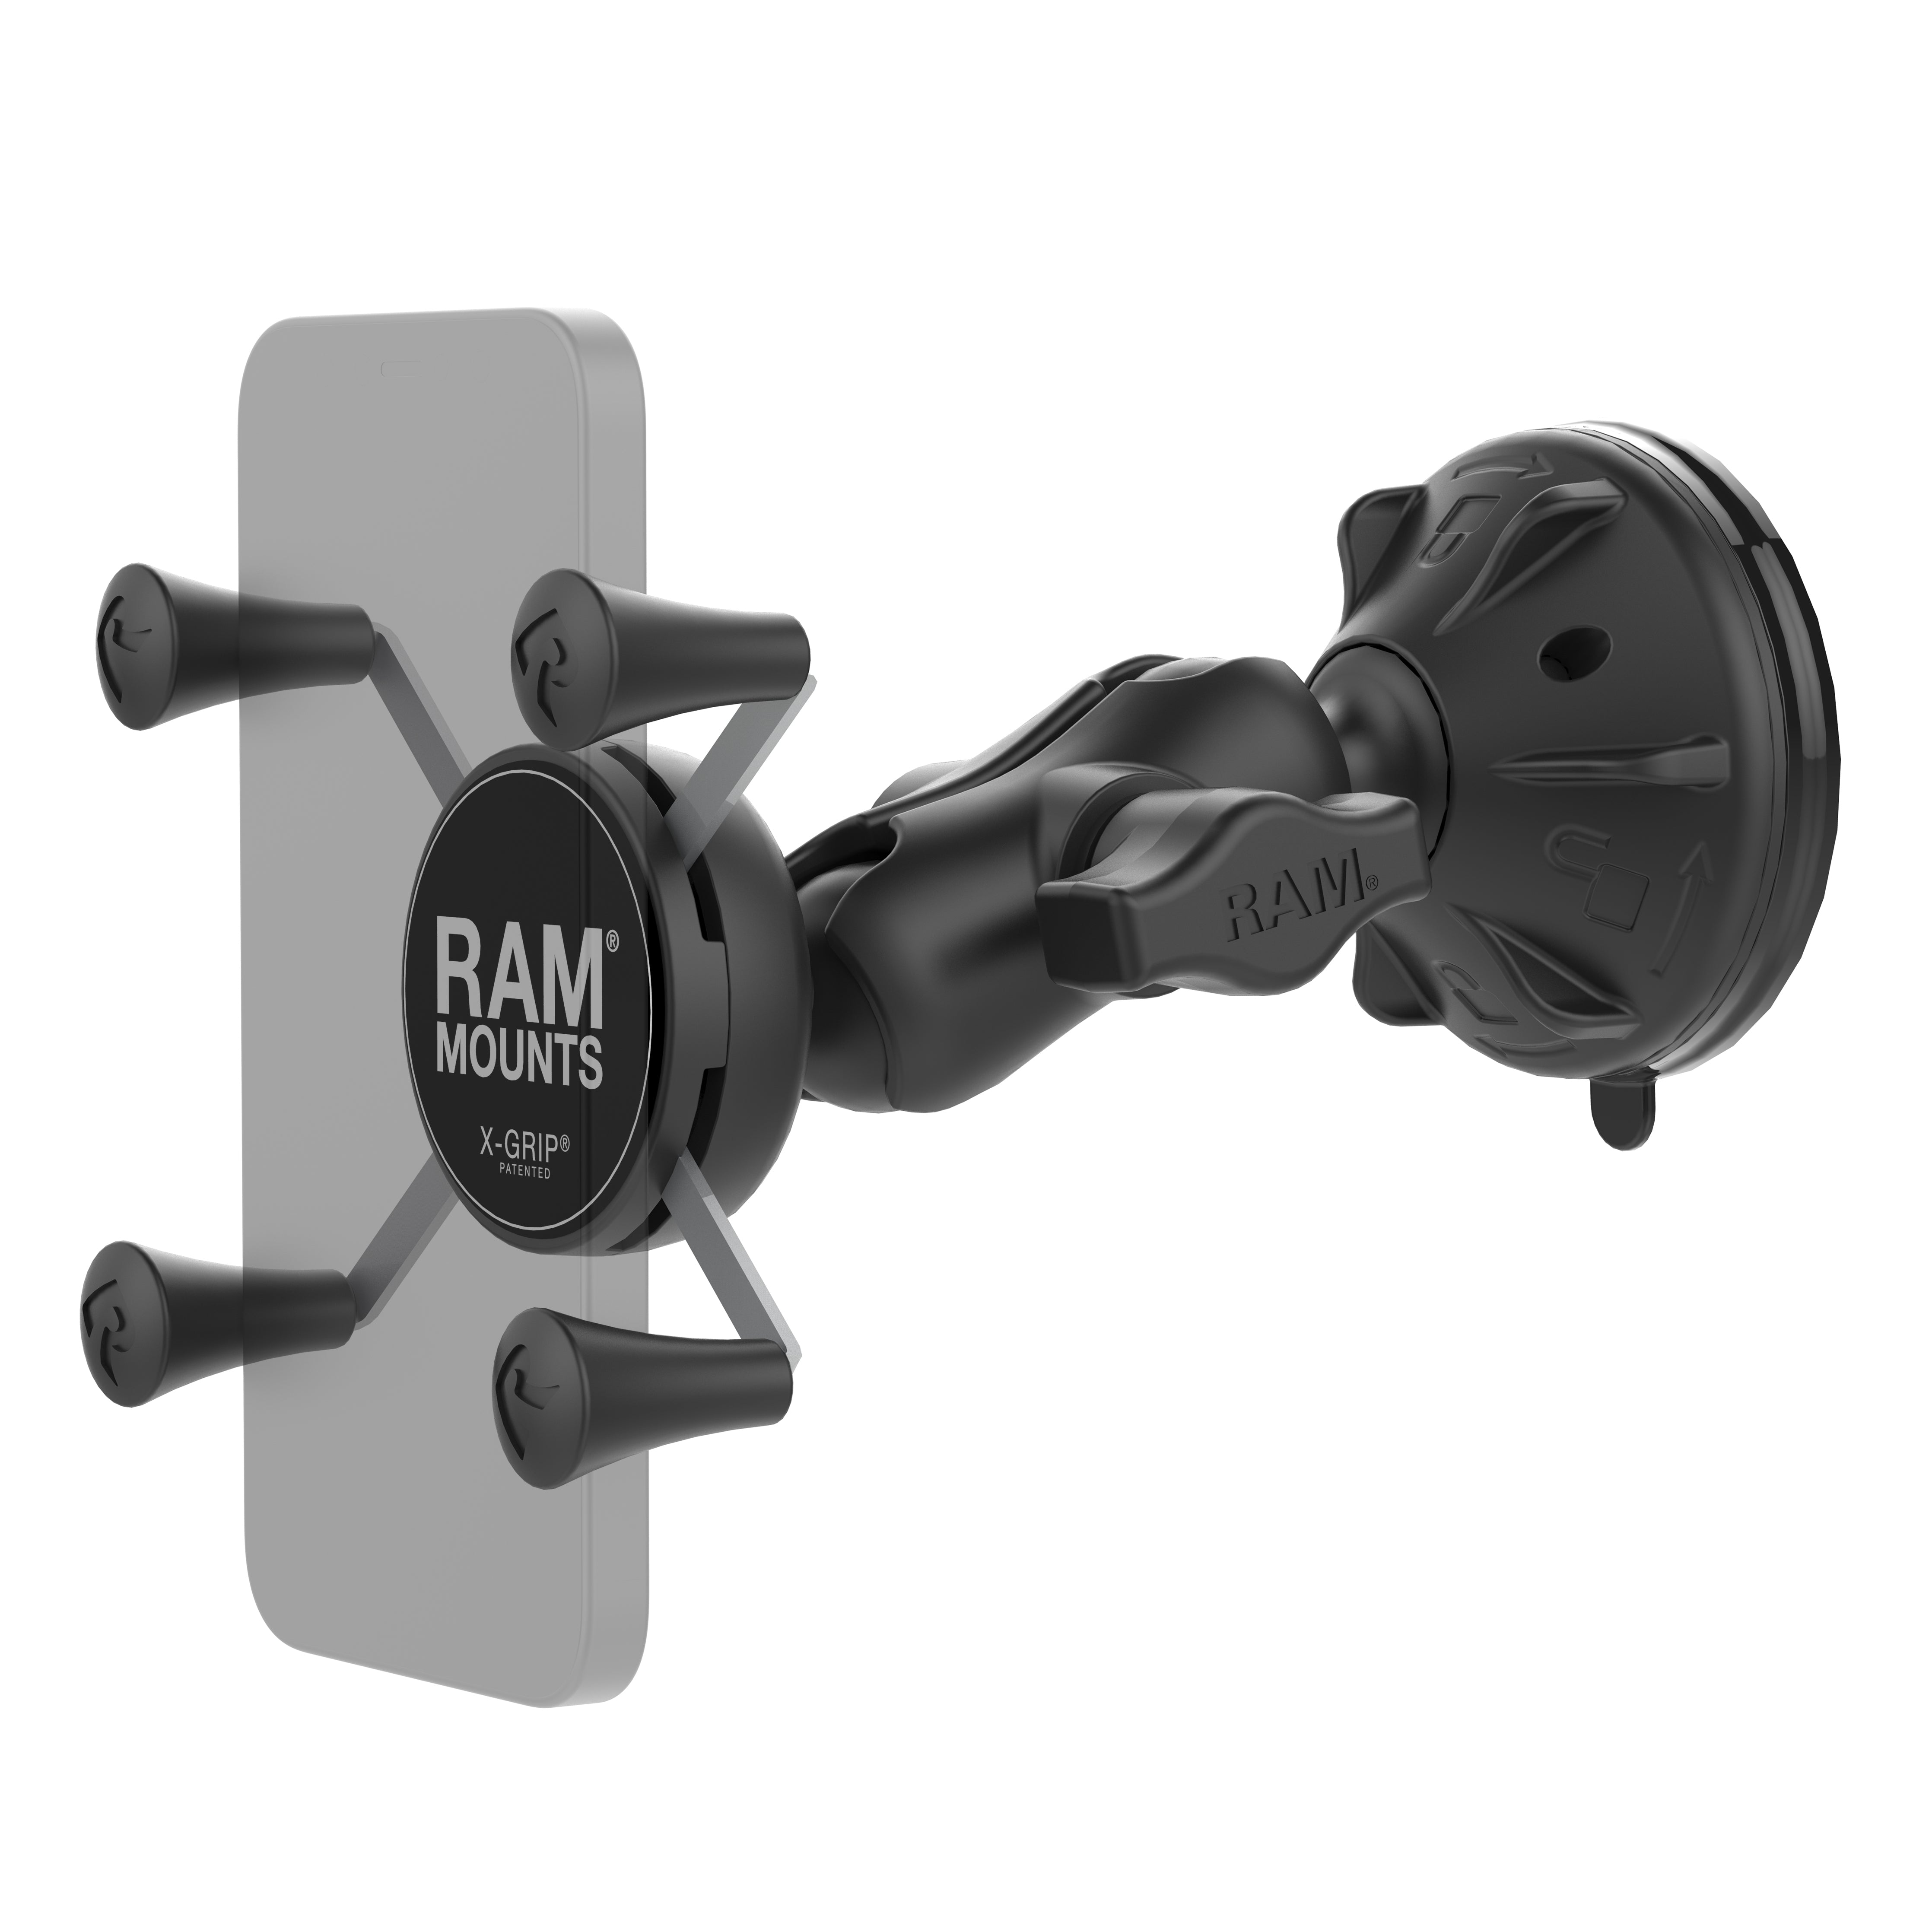 RAM Mounts X-Grip Phone Mount with Twist-Lock Suction Cup Base  RAP-B-166-UN7U with Medium Arm for Vehicle Windshields